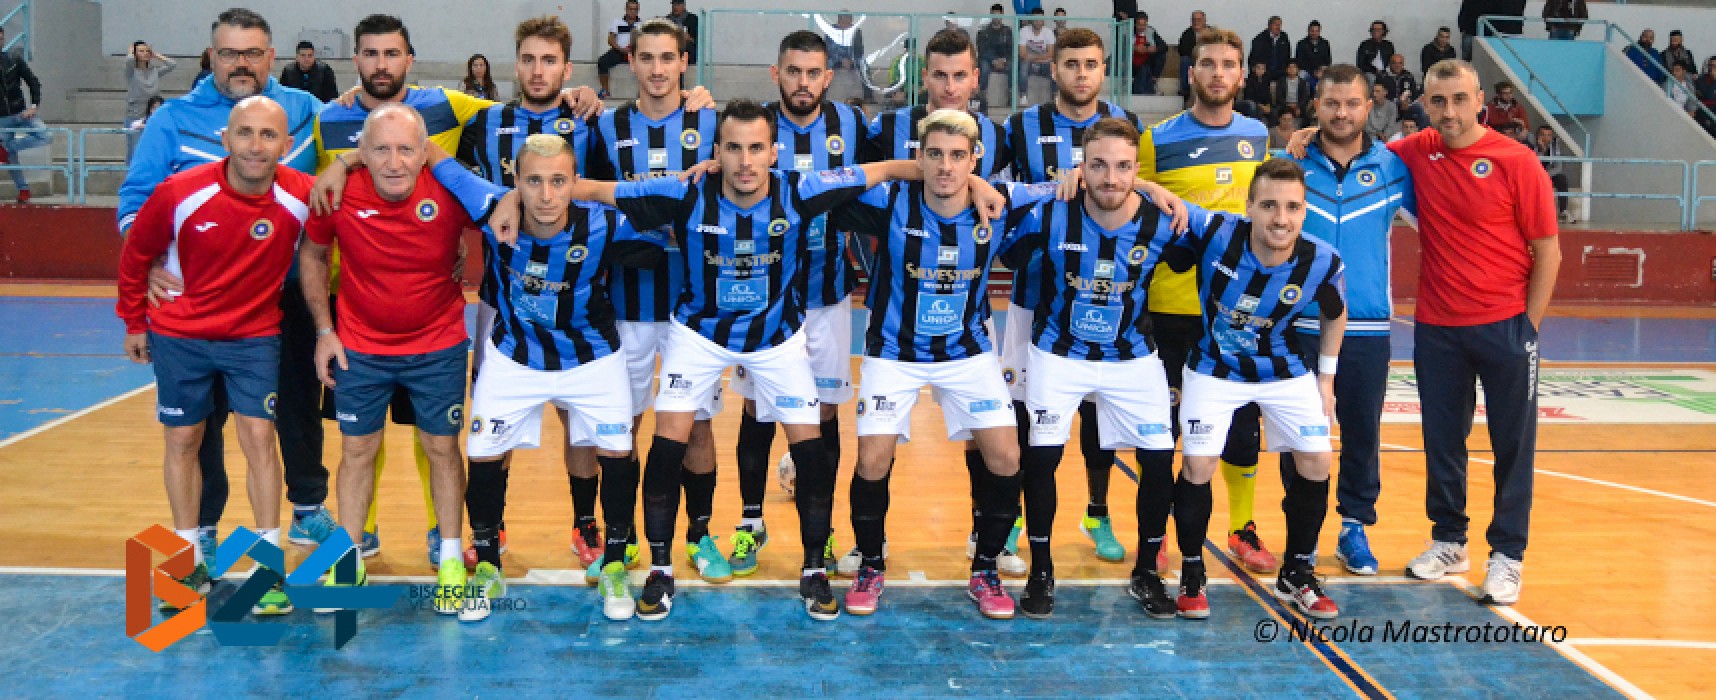 Catania corsaro al PalaDolmen, Futsal Bisceglie ko